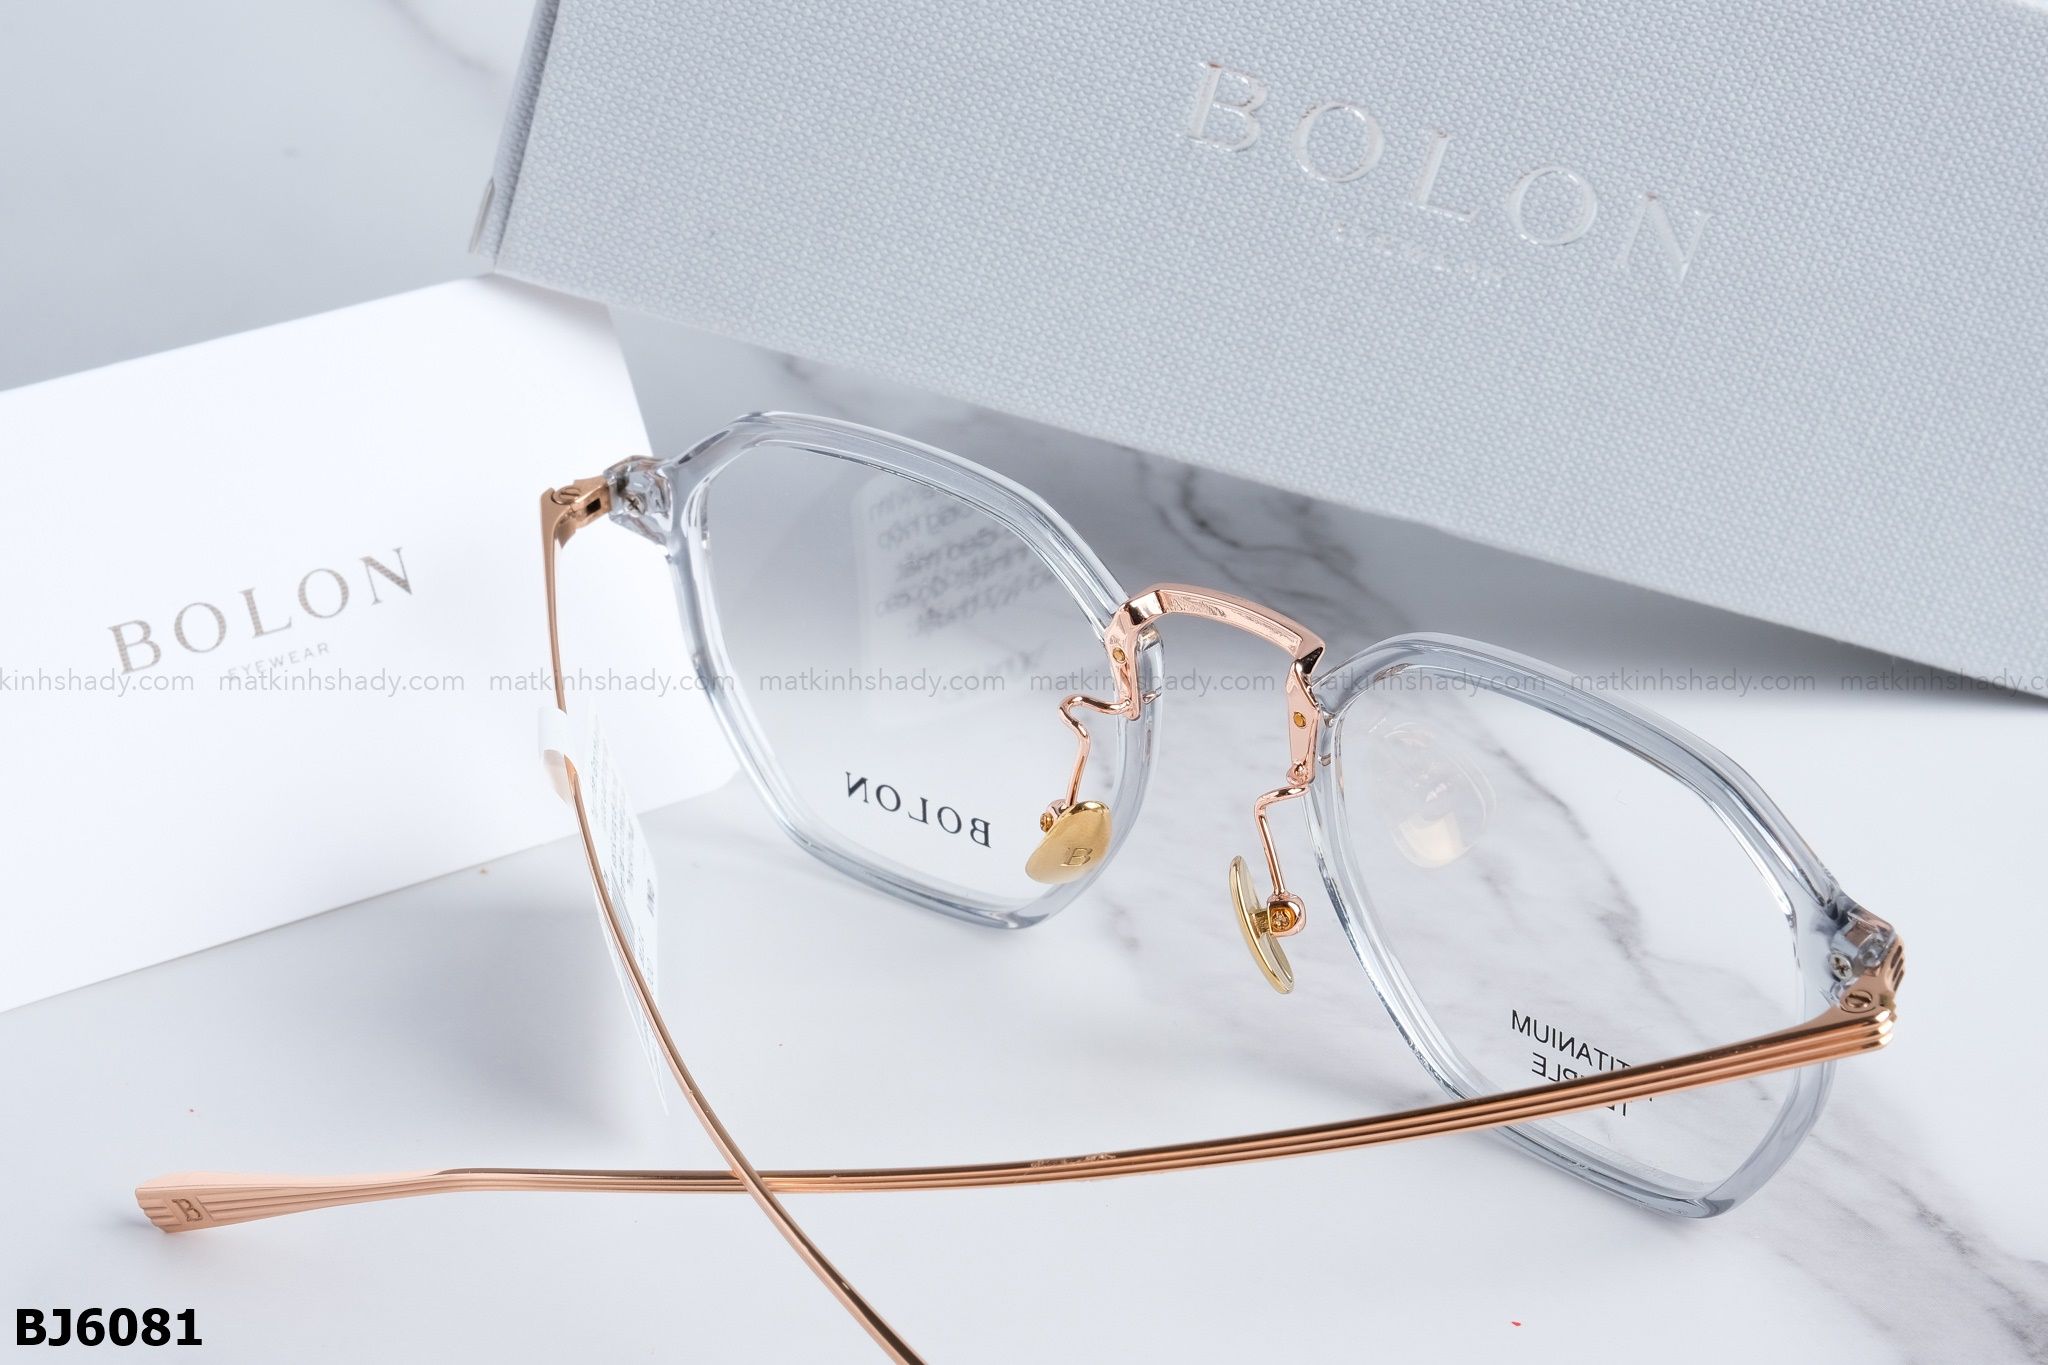  Bolon Eyewear - Glasses - BJ6081 